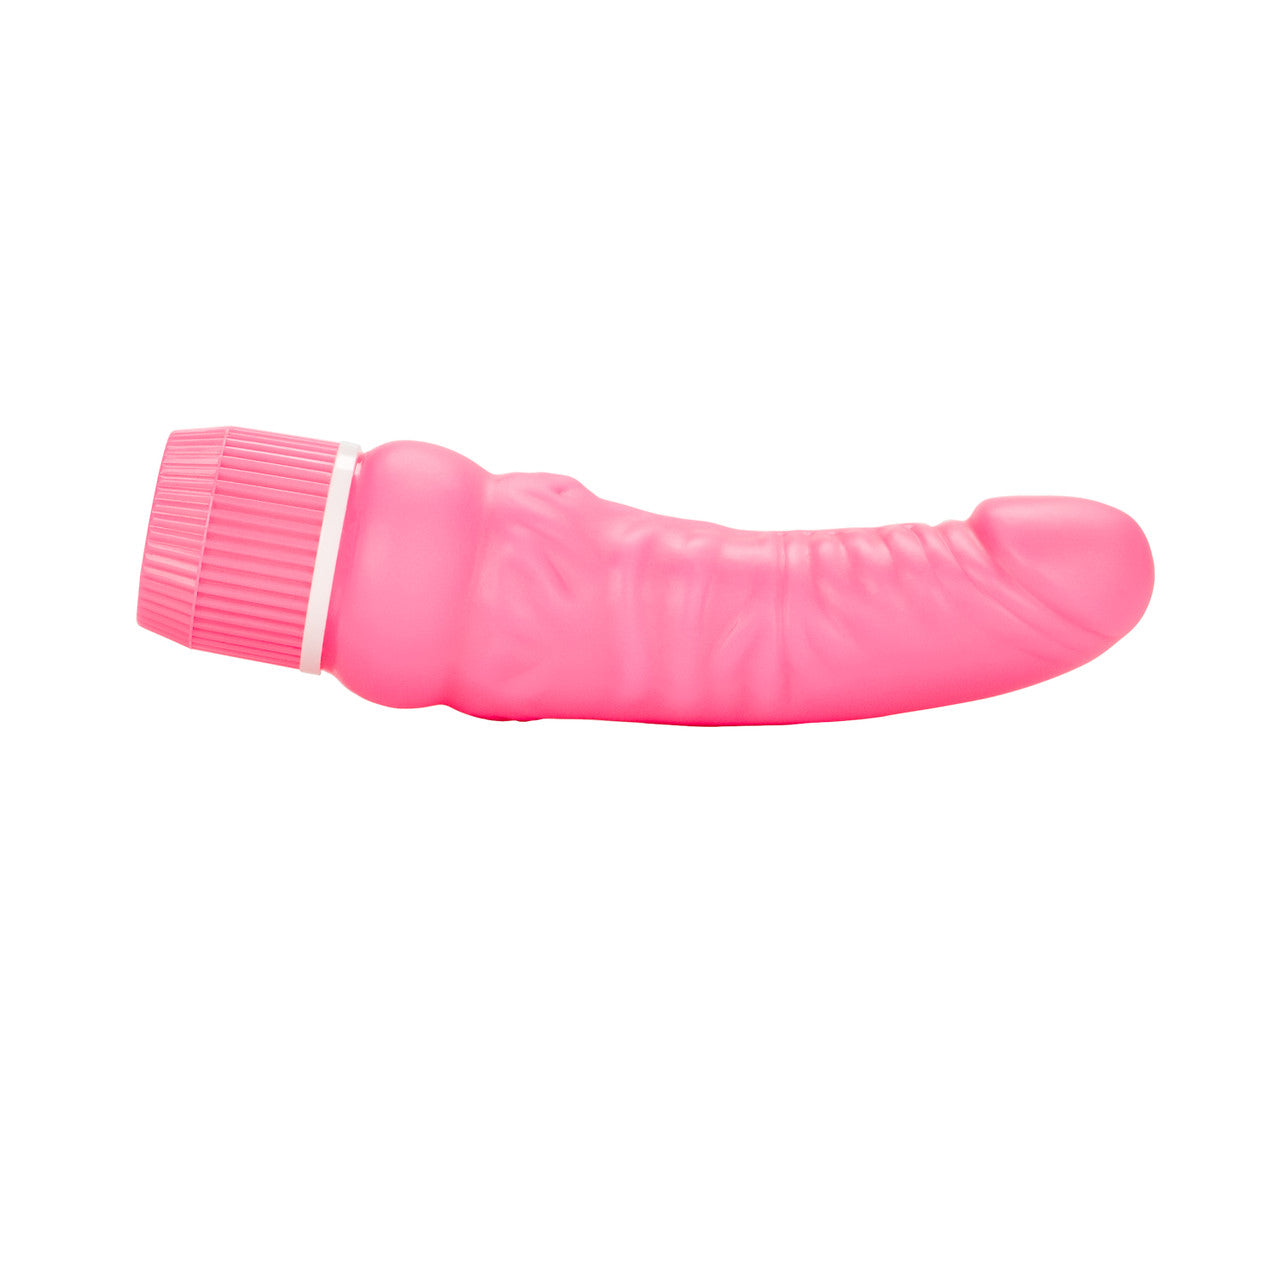 Spellbound Stud Curved Jack Vibrator - Pink